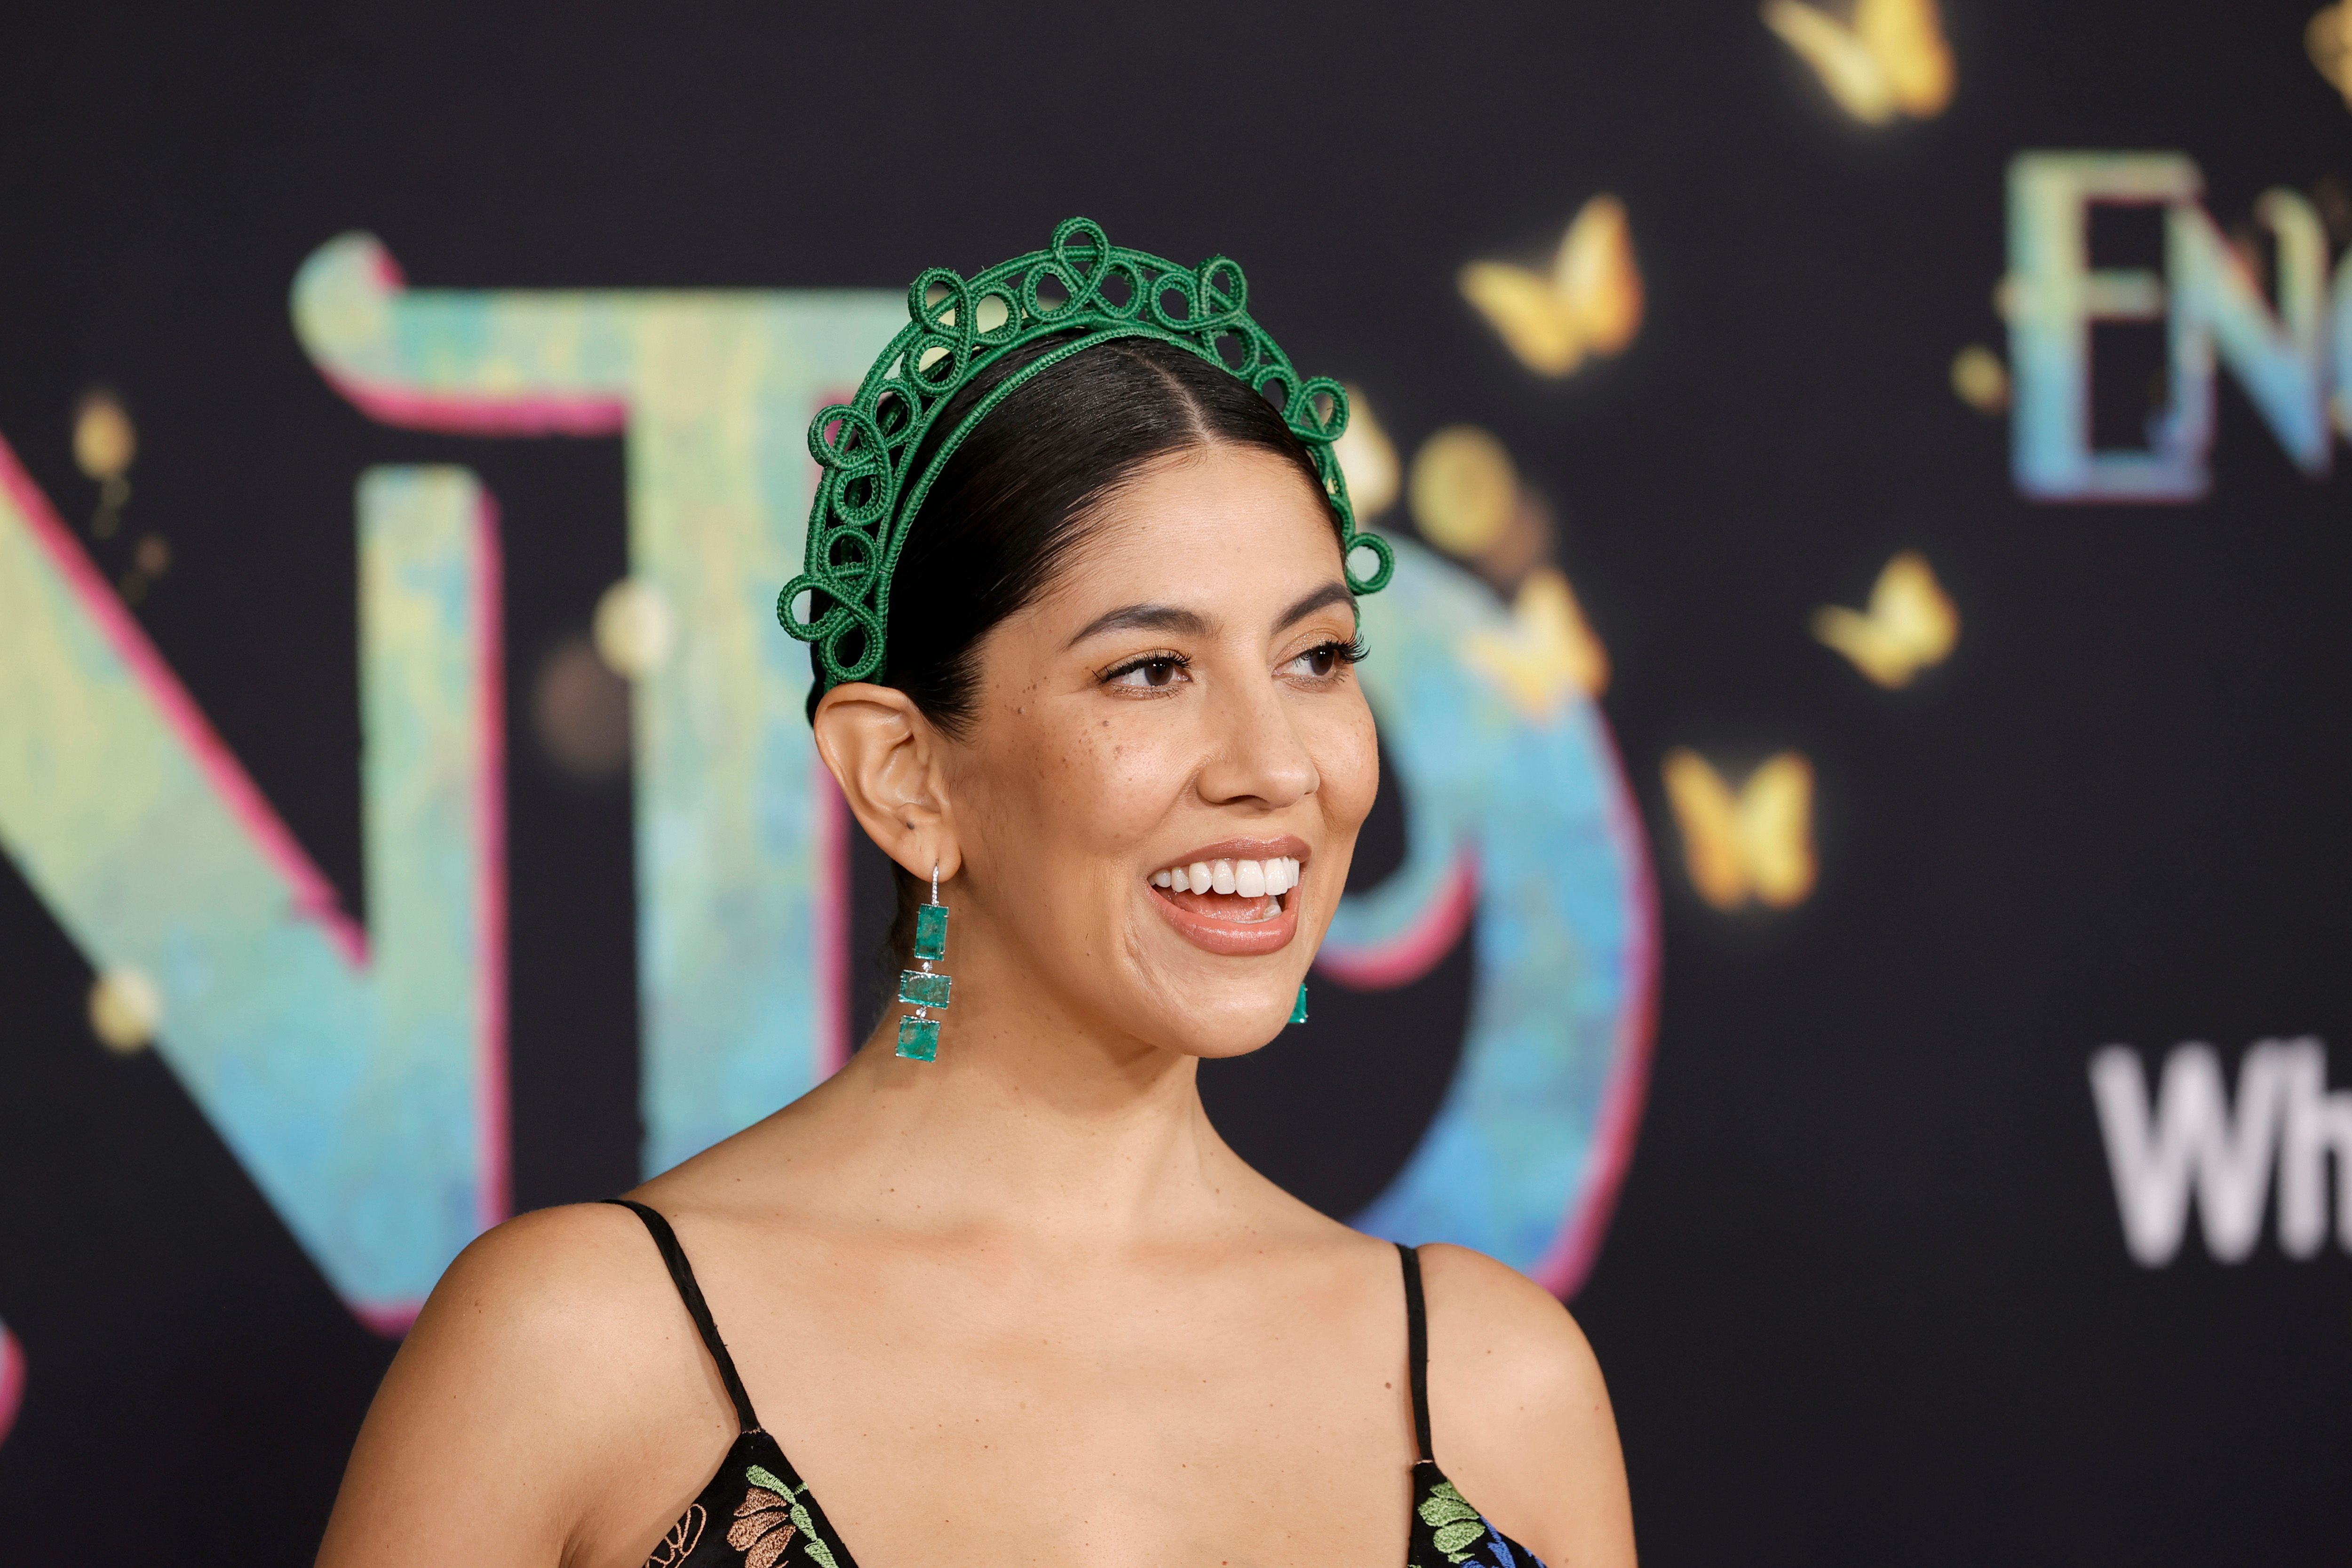 Stephanie Beatriz attends Disney Studios' premiere of 'Encanto' wearing green headline